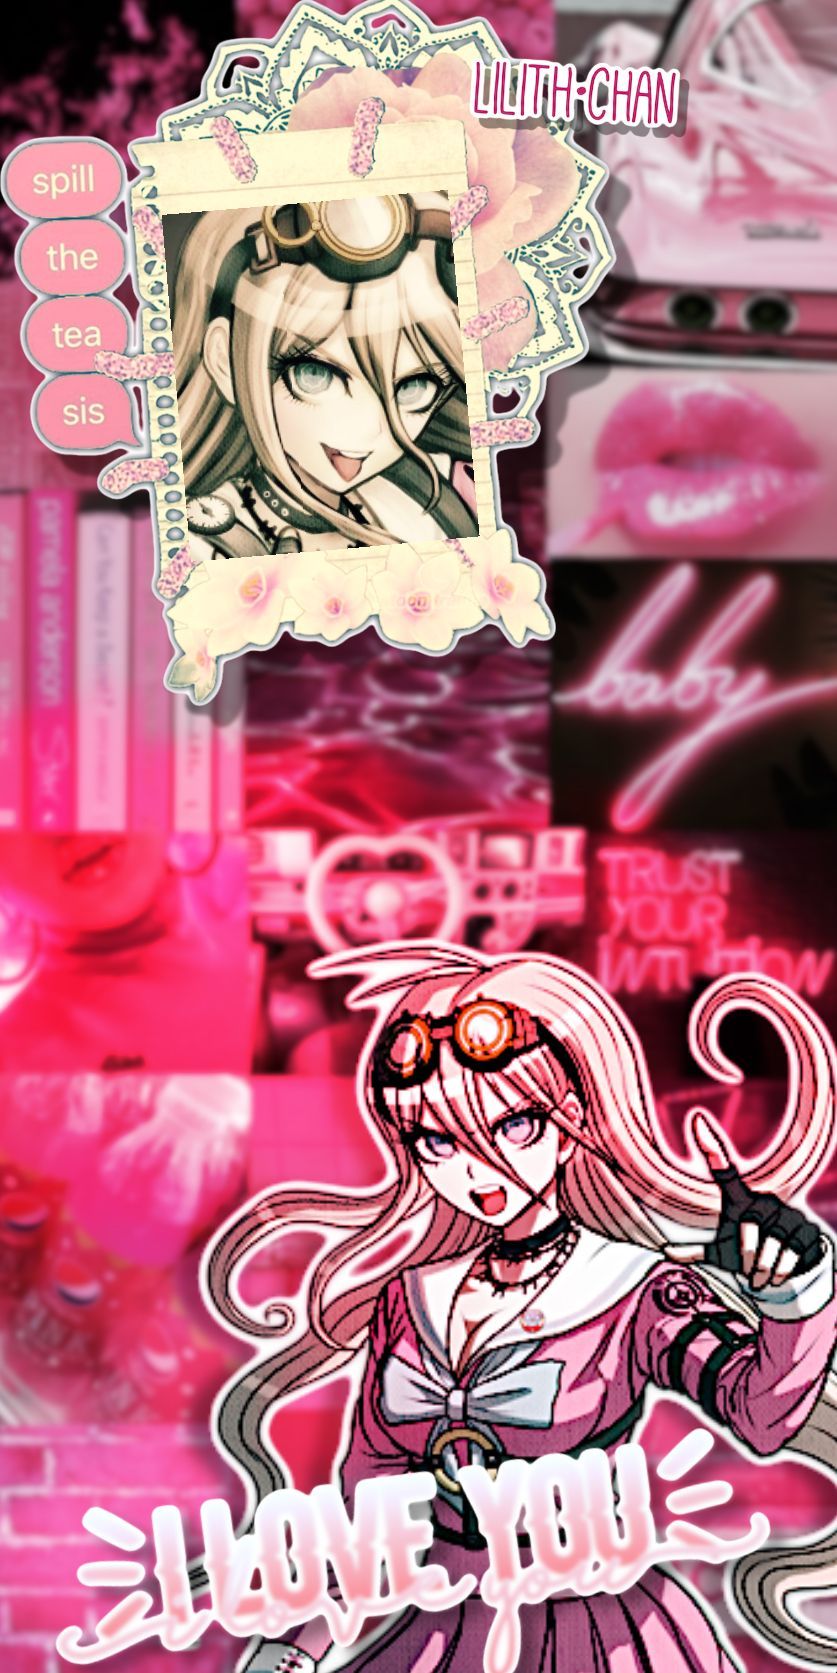 miu iruma from danganronpa wallpaper. Danganronpa wallpaper, Anime wallpaper phone, Pink anime background